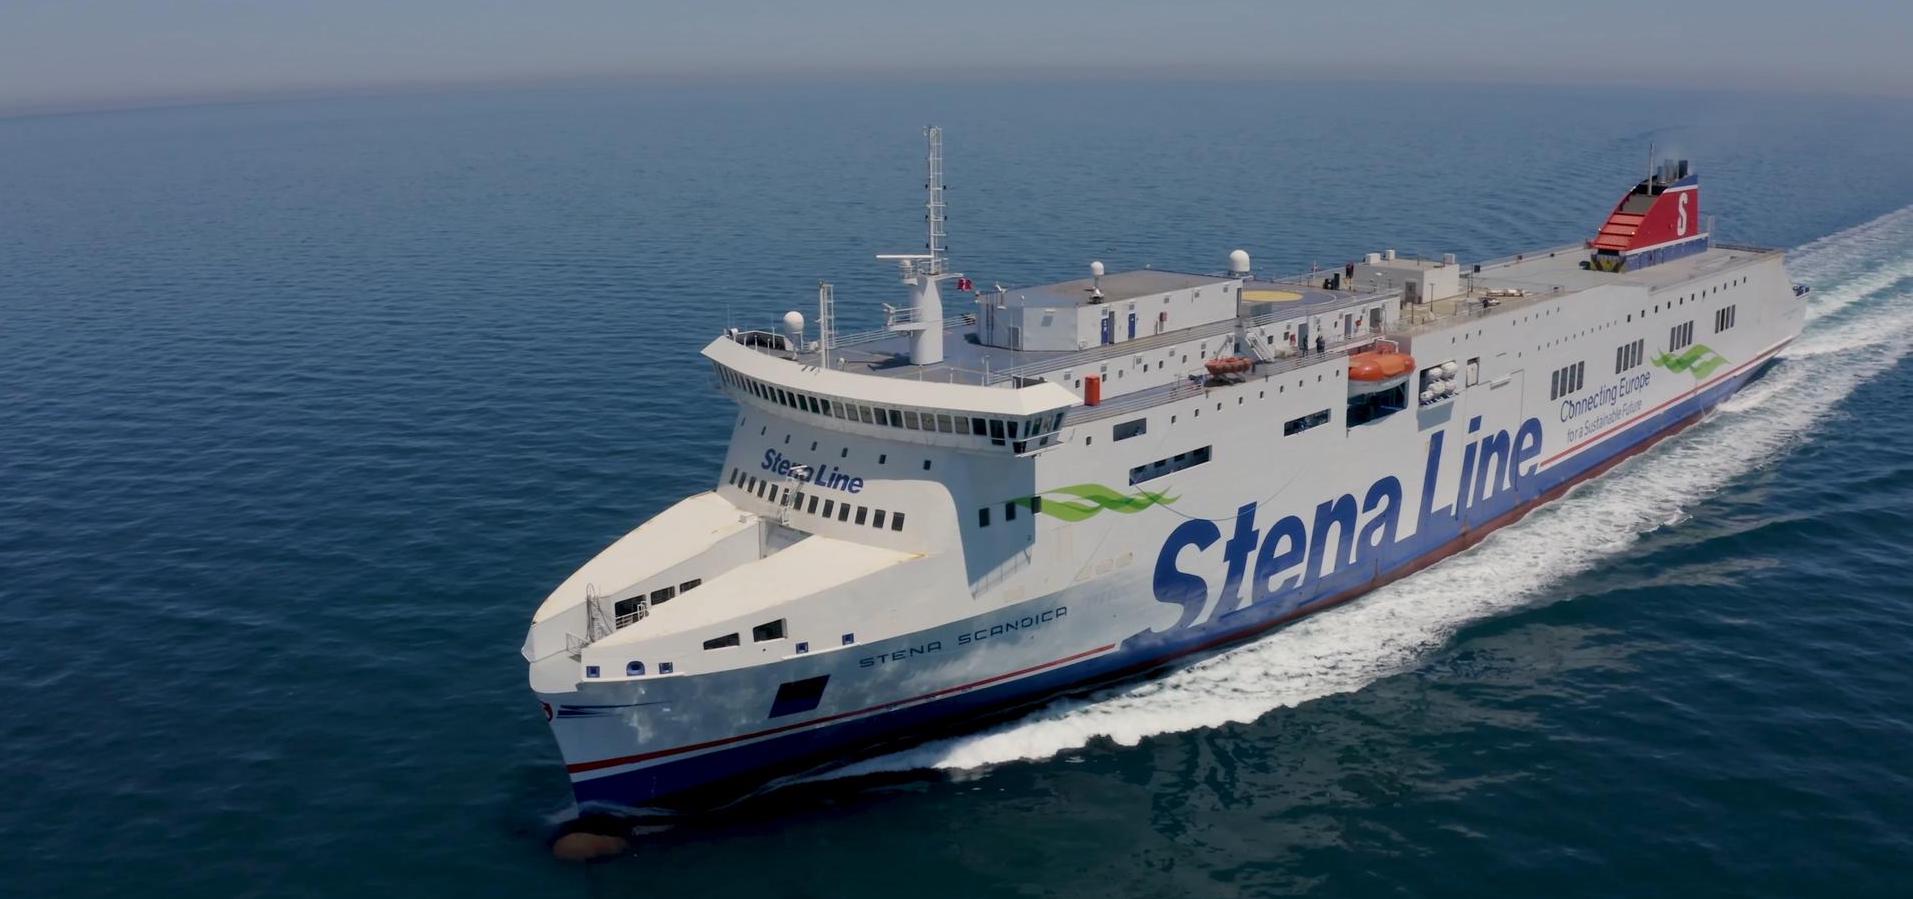 Foto av Stena Line - Stena Scandica skepp